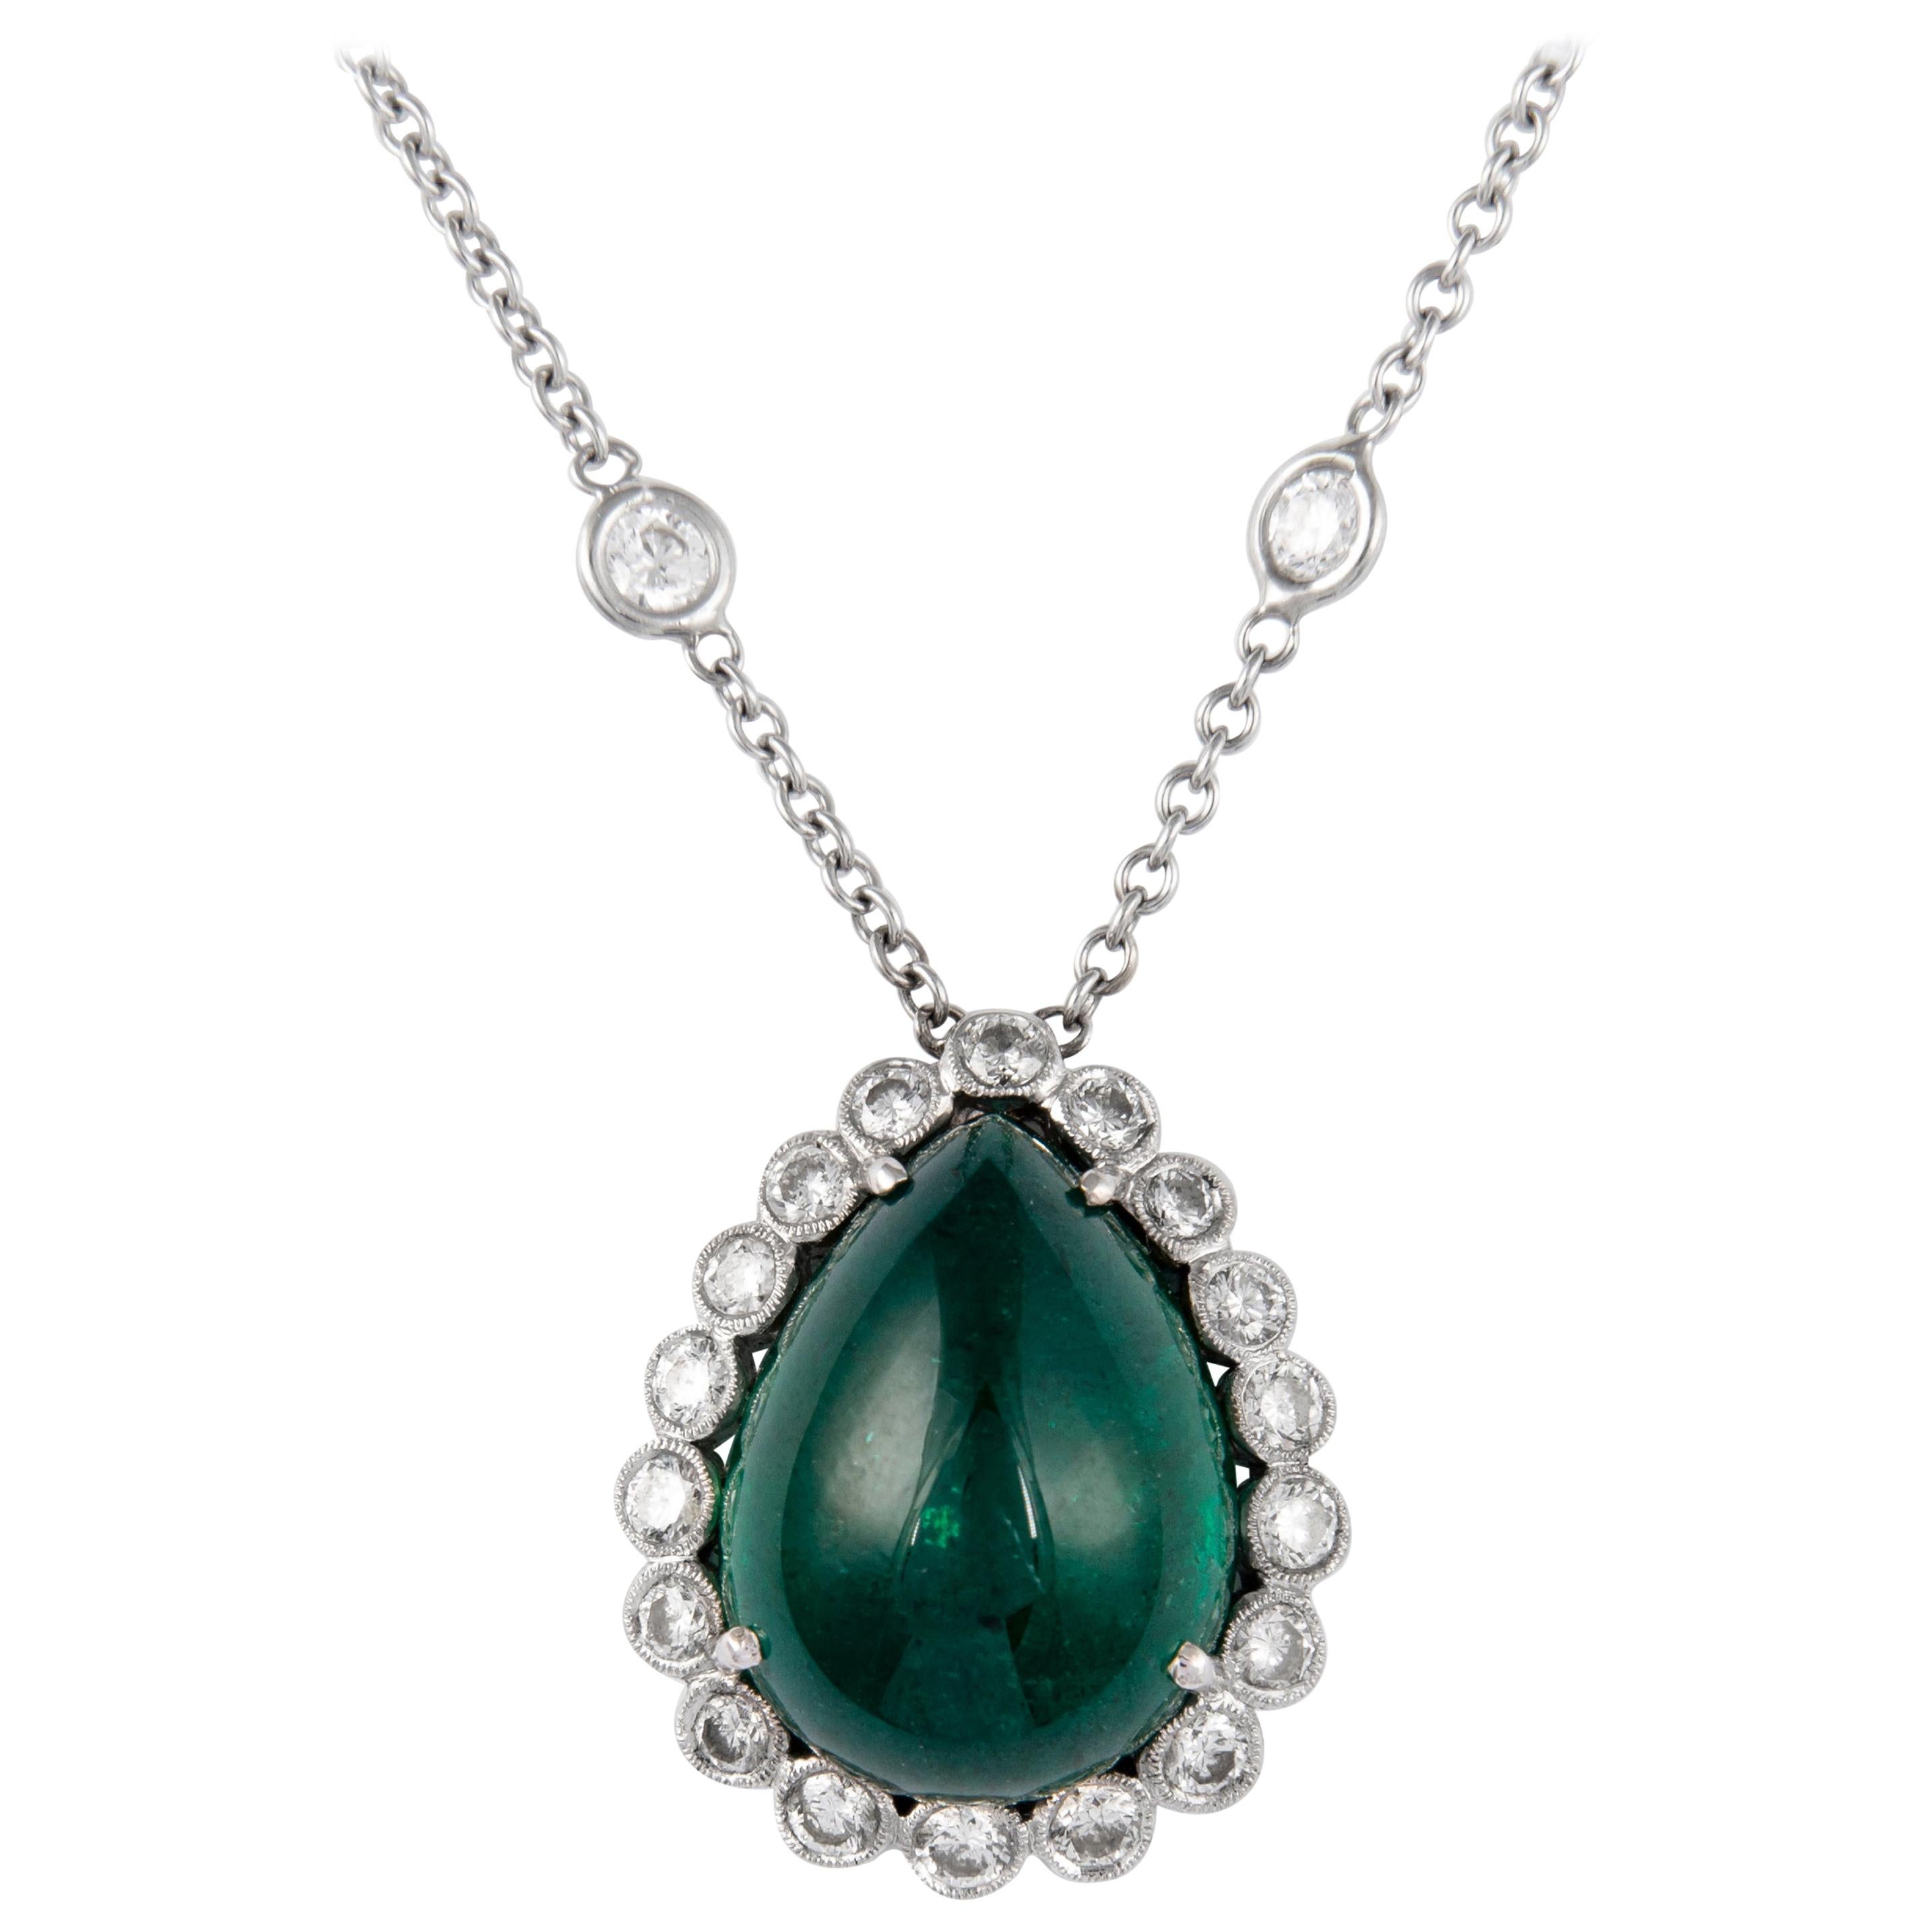 12.31ct Pear Cabochon Emerald with Diamond Halo 18k White Gold Pendant Necklace